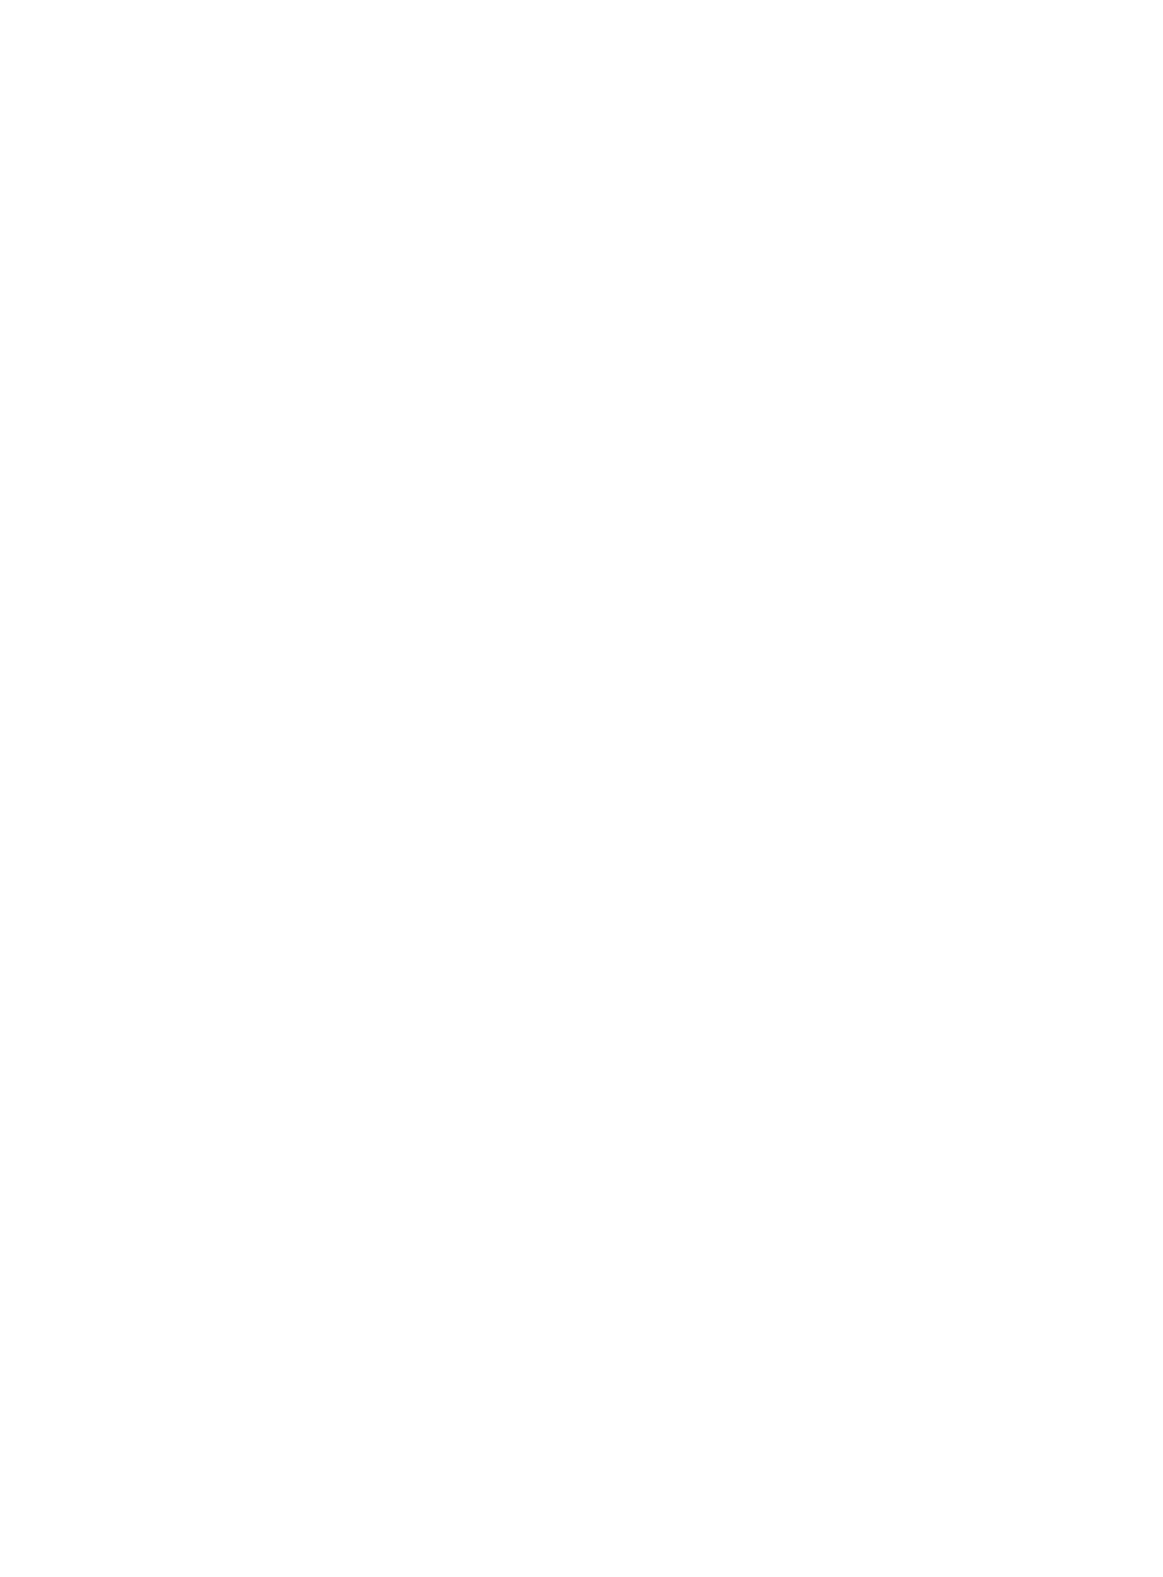 Esperion Therapeutics logo for dark backgrounds (transparent PNG)